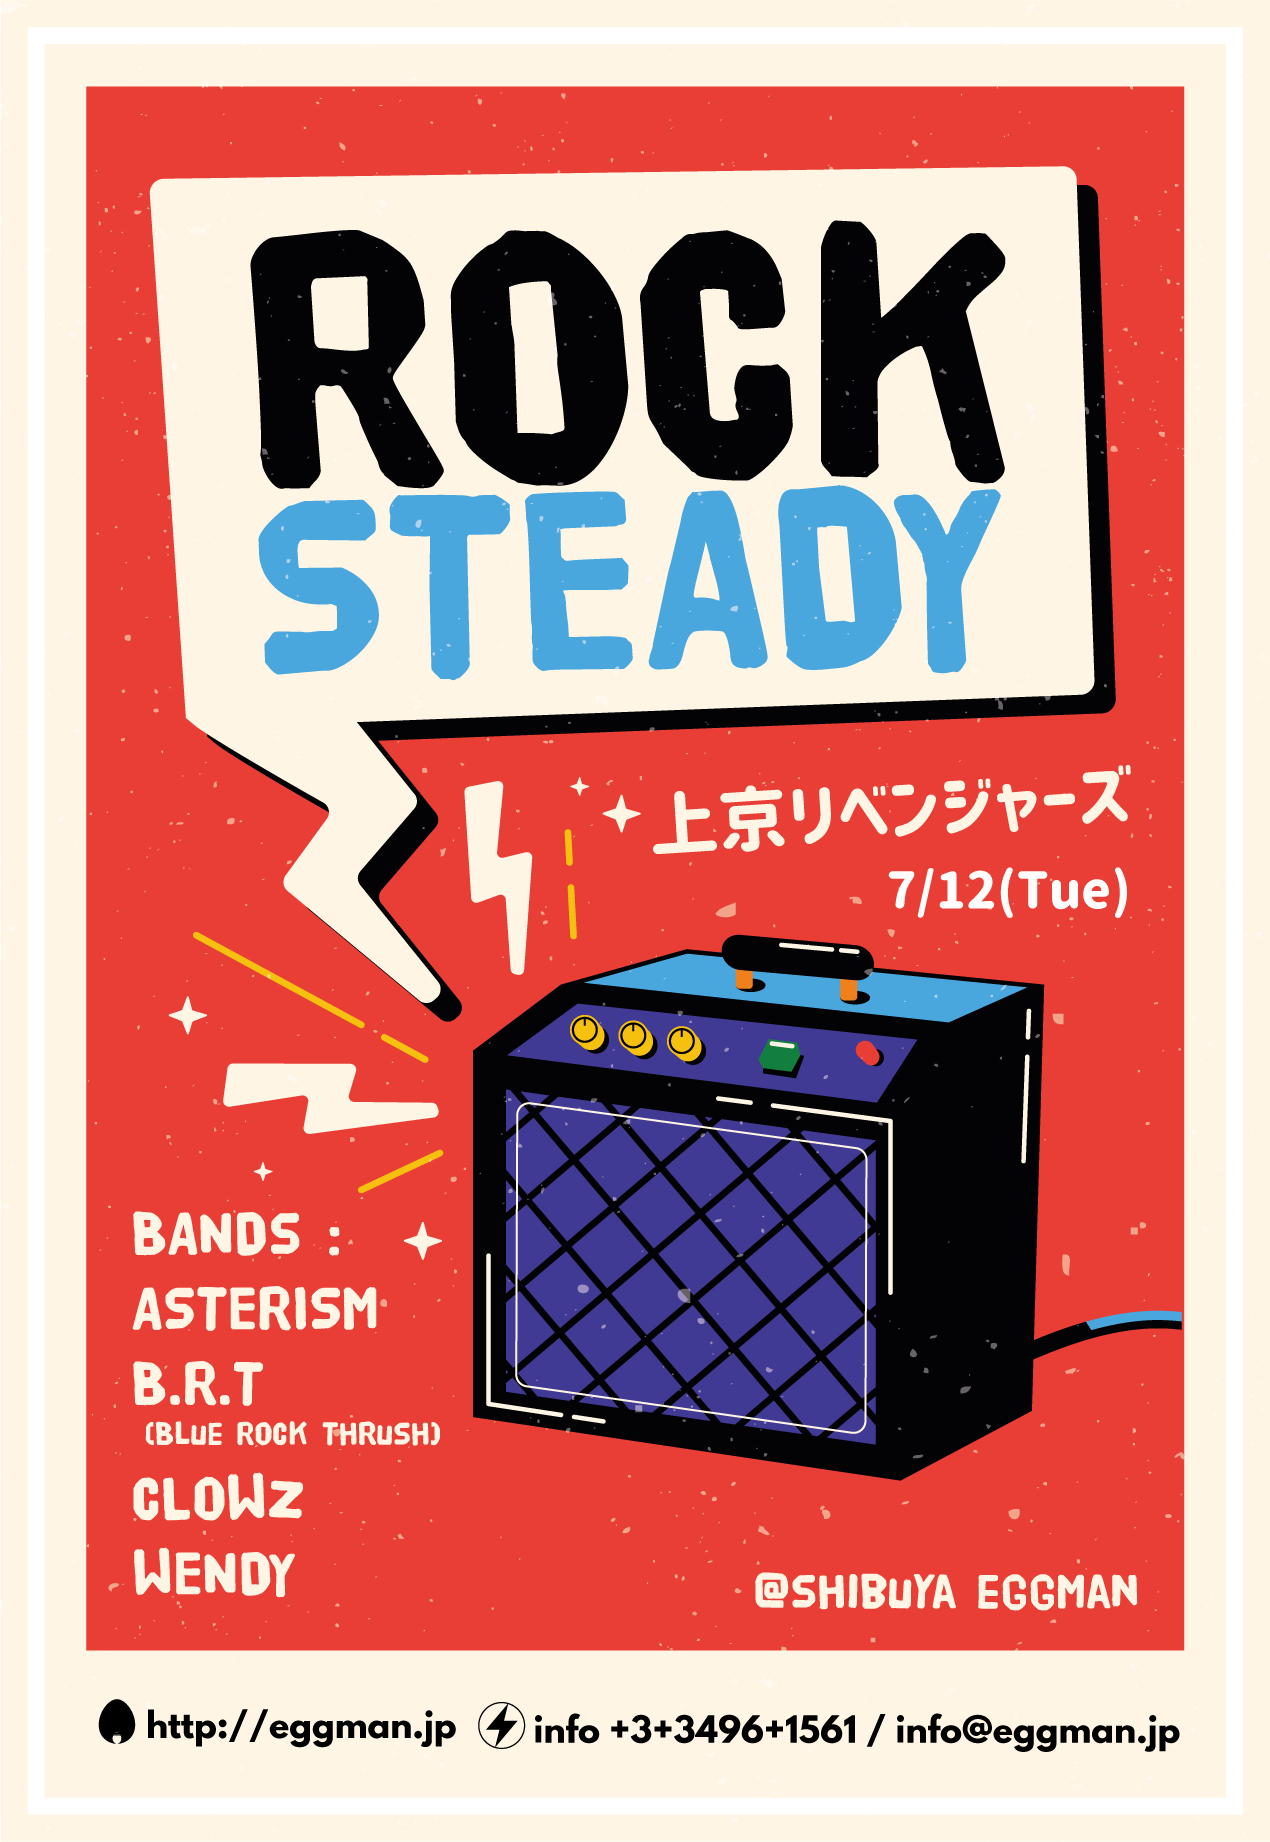 【7/12 Tue】「ROCK STEADY -上京リベンジャーズ-」出演決定！　※7/5(火)情報追加